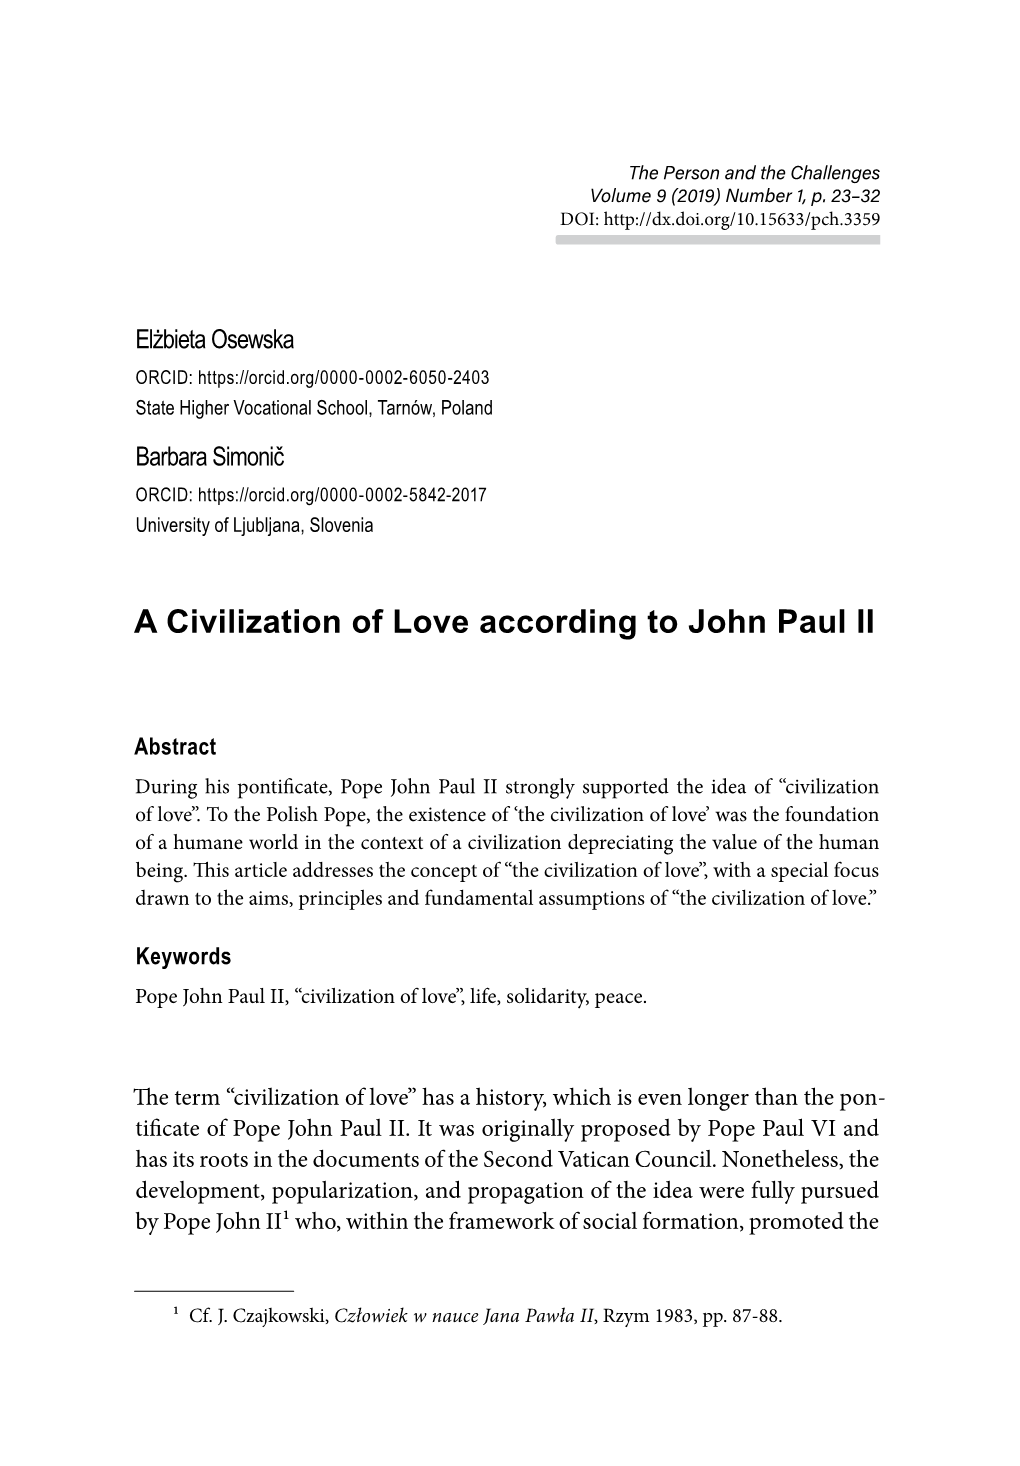 A Civilization of Love According to John Paul II